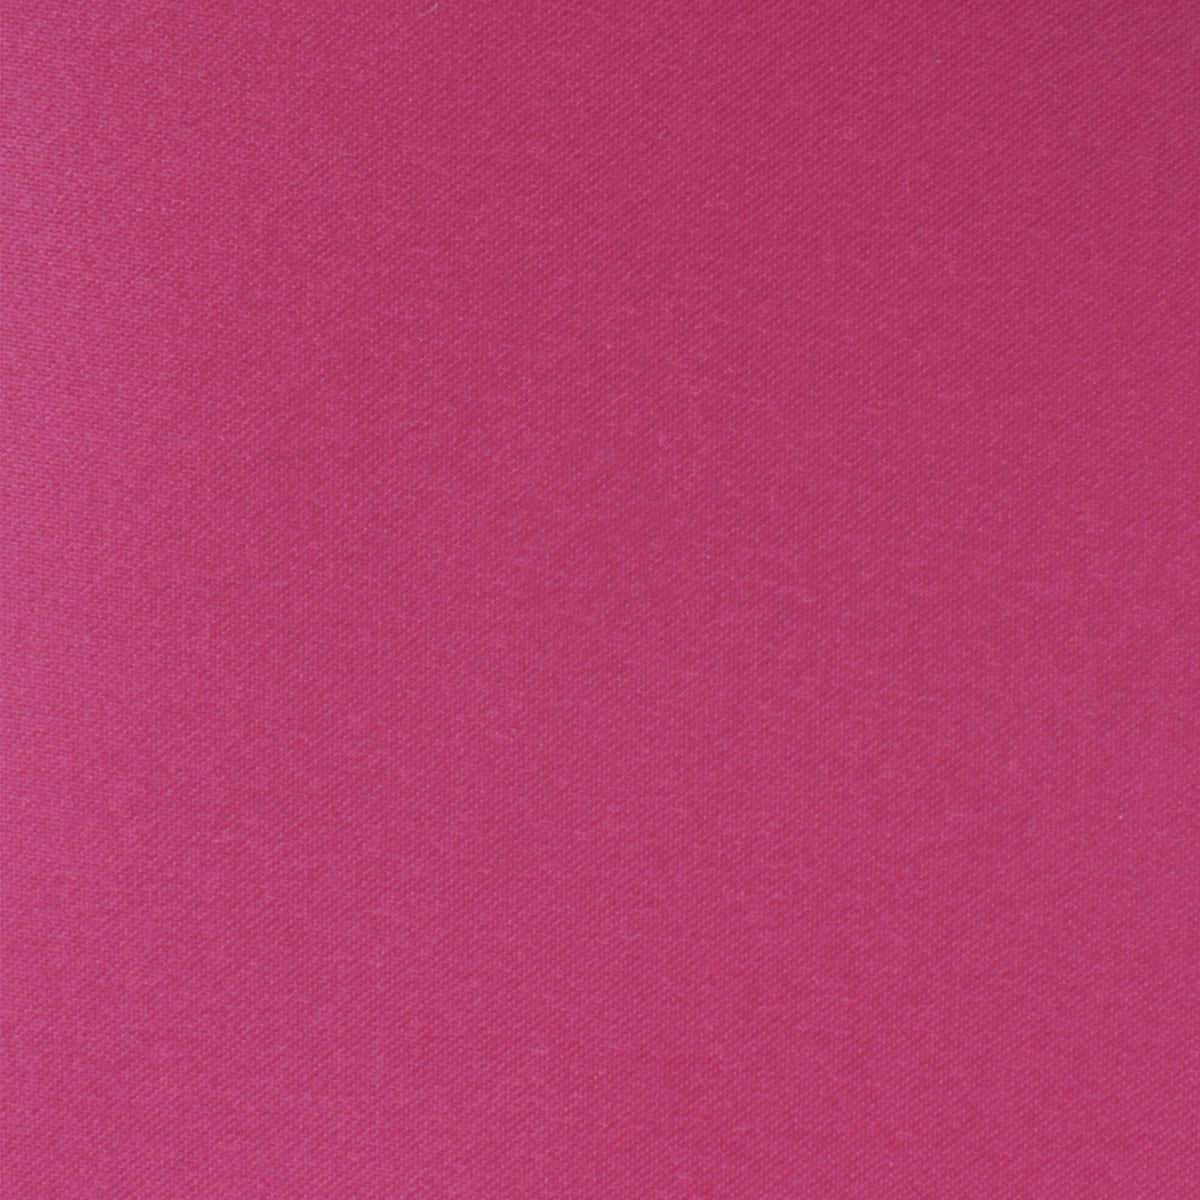 Magenta Pink Satin Pocket Square Fabric